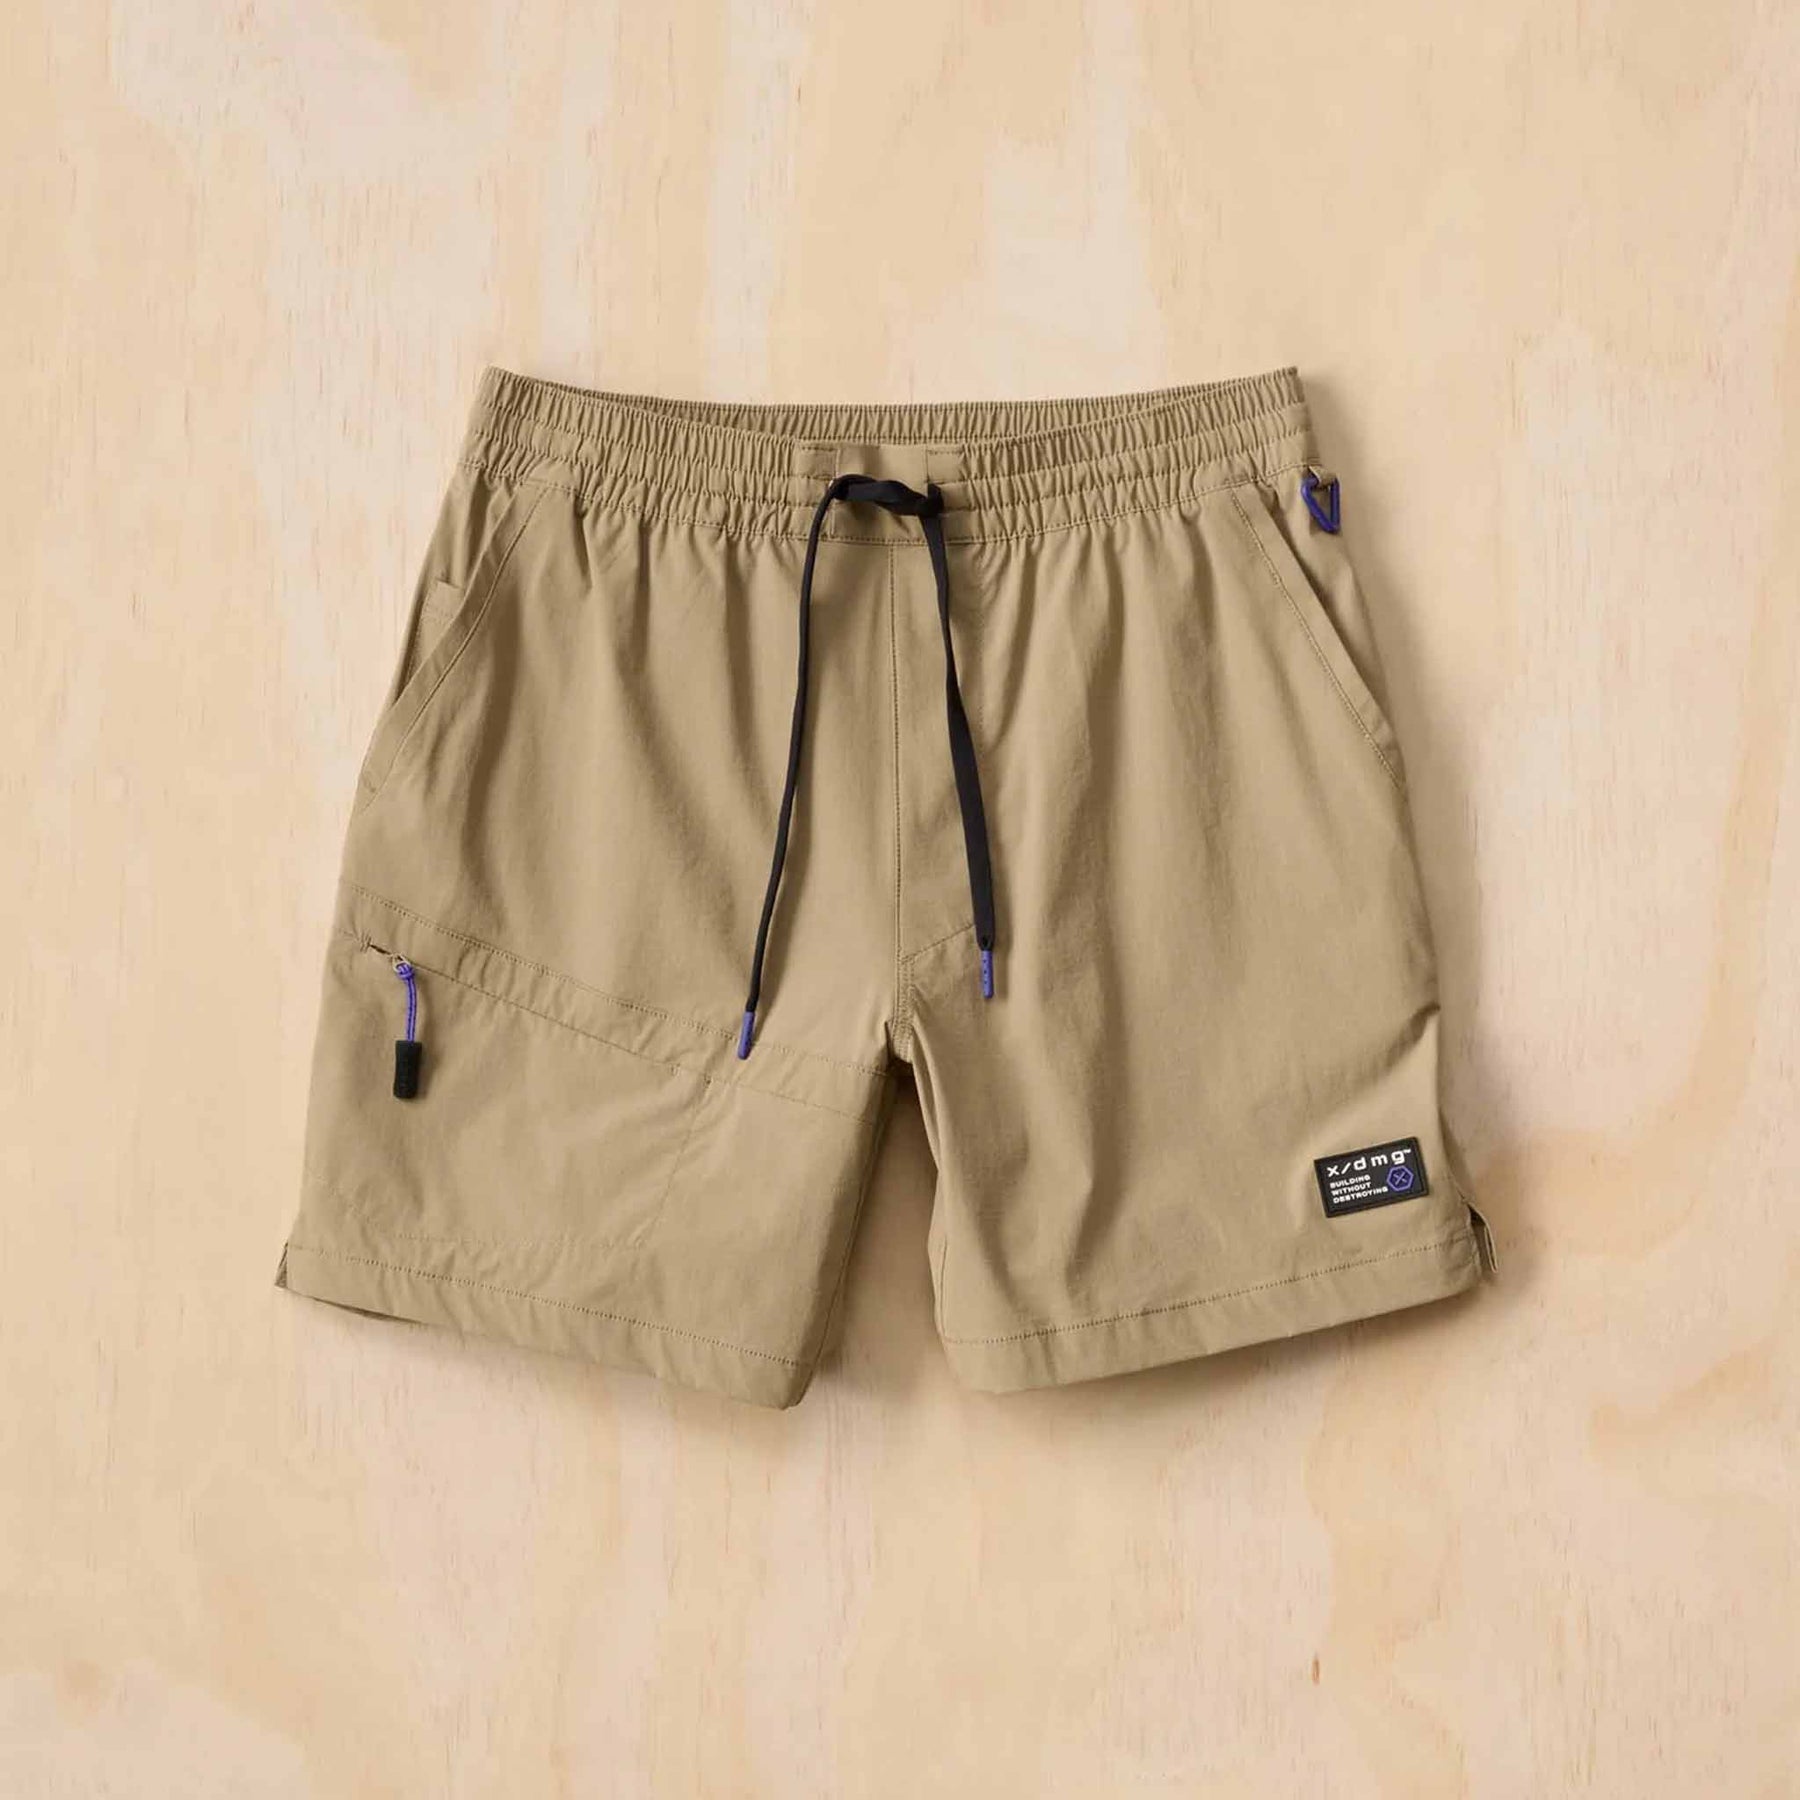 x/dmg stretch waist shorts in khaki